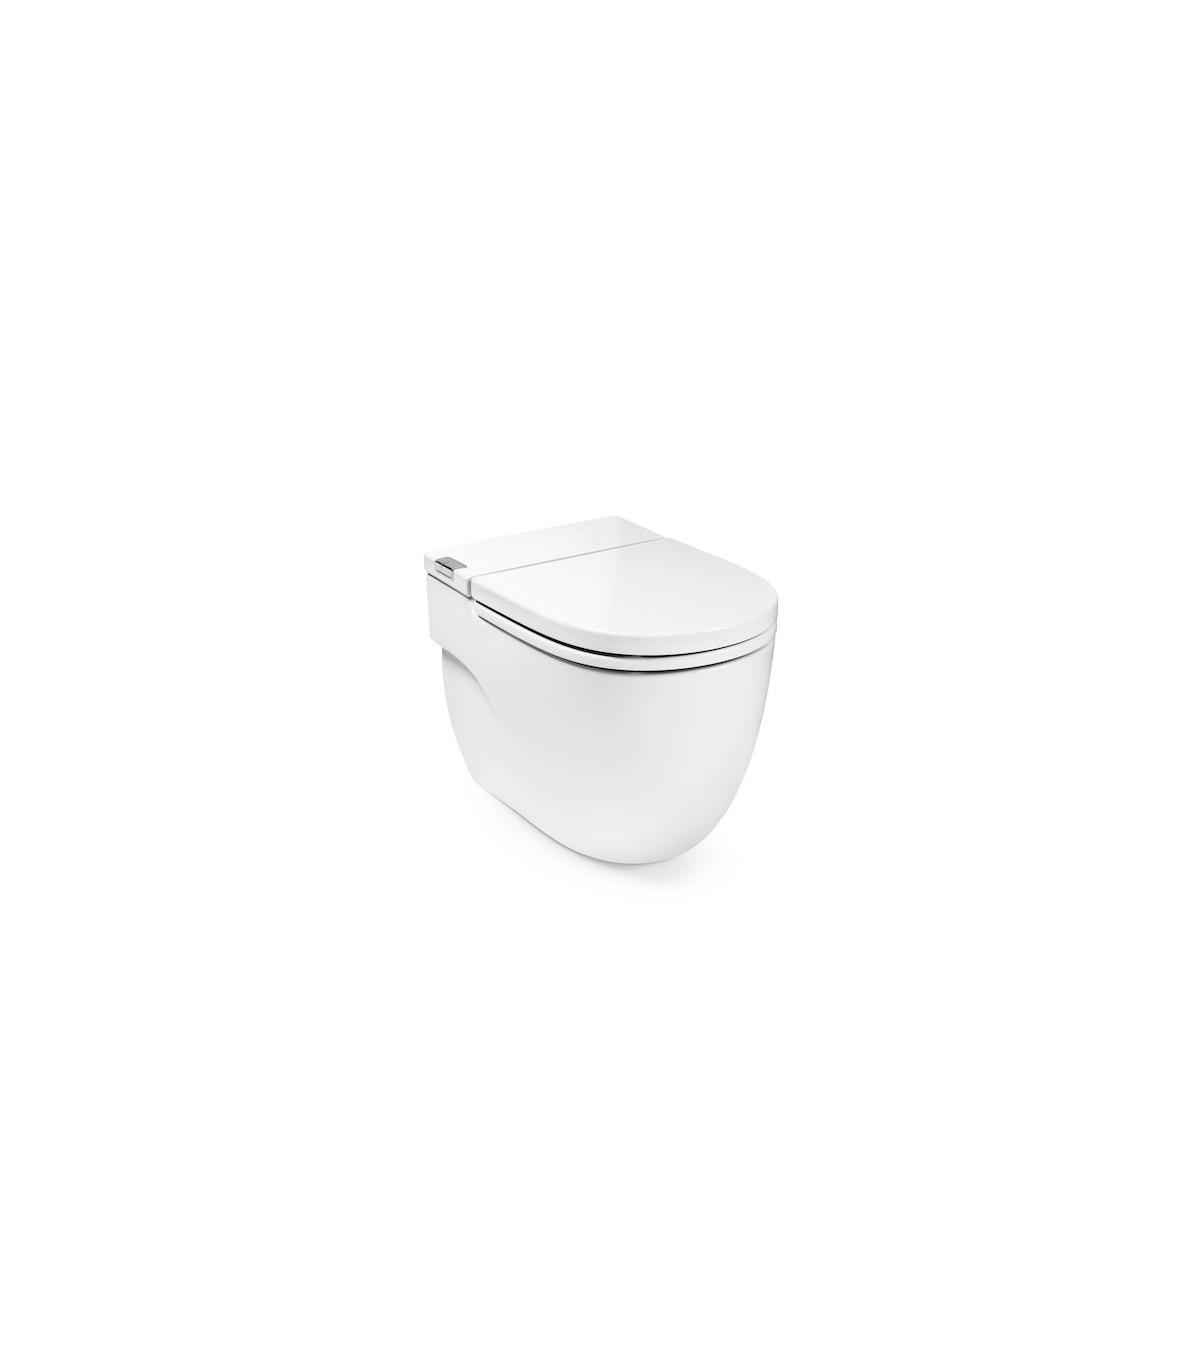 Ceramic Toilet Flush Tanks - An Overview